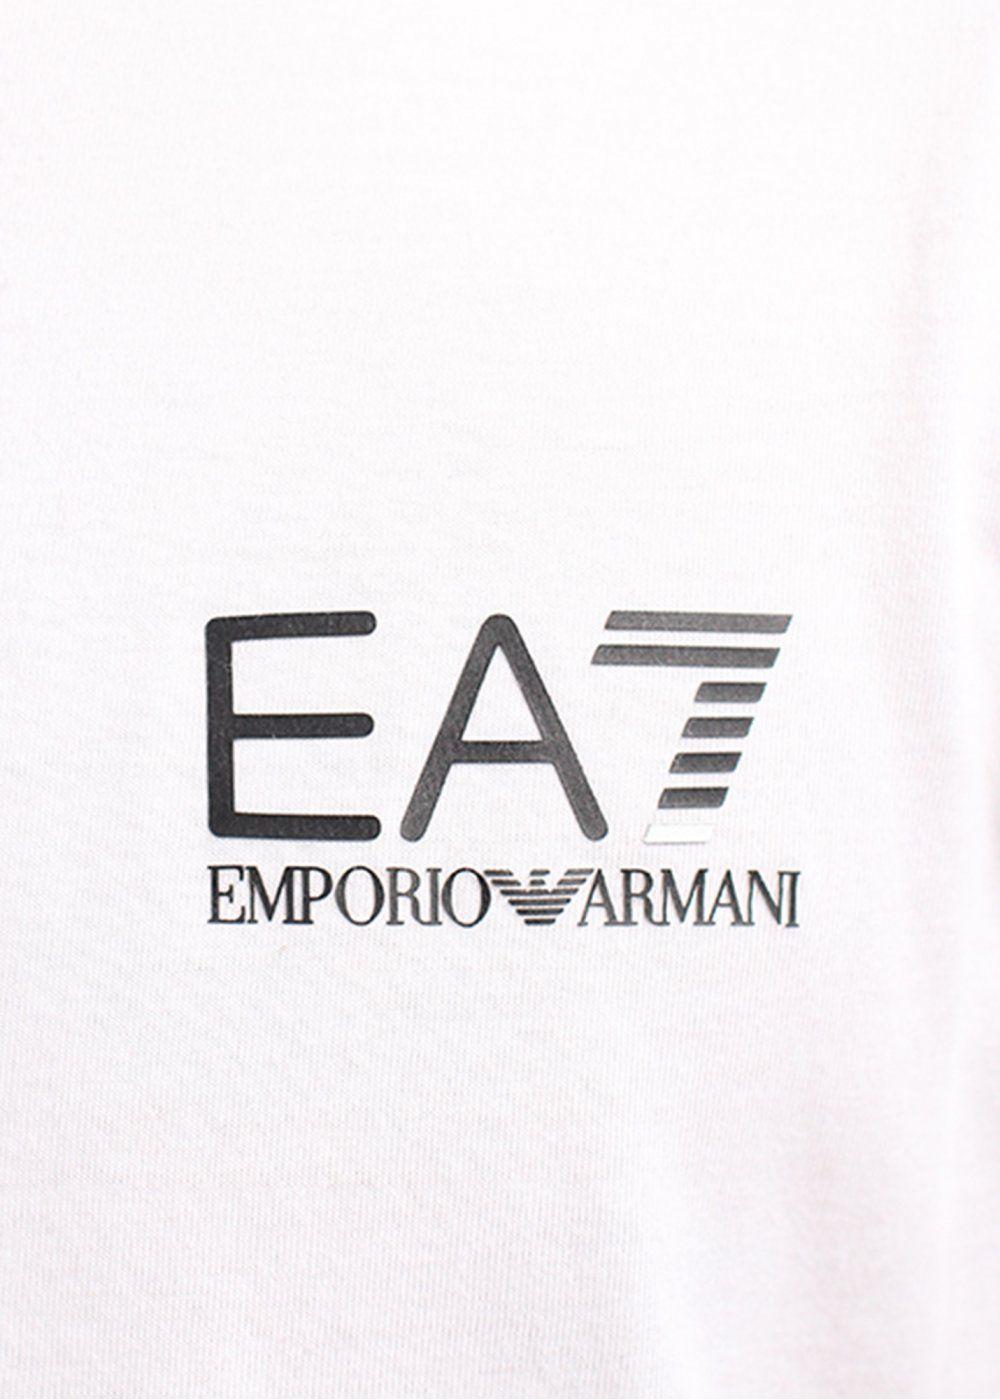 Emporio Armani Logo Wallpaper